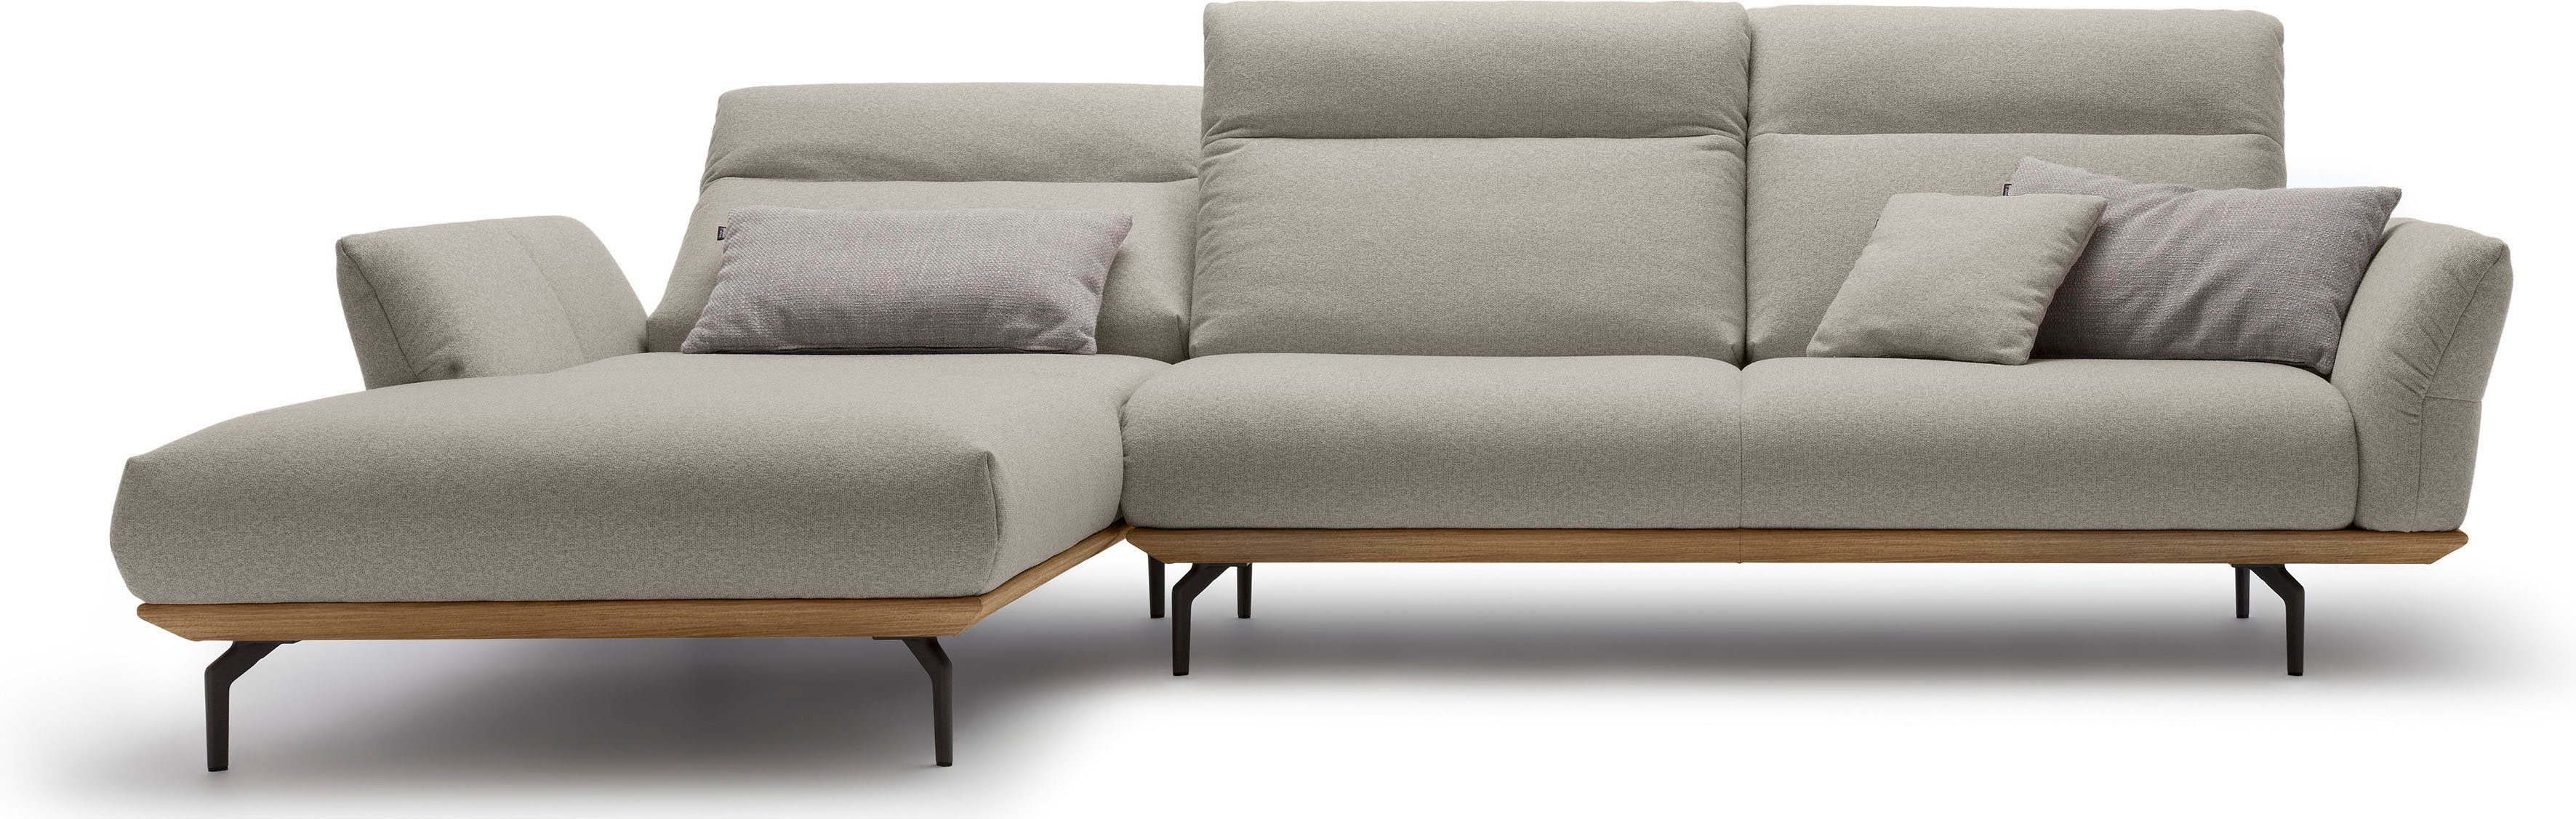 hülsta sofa Ecksofa hs.460, Sockel in Nussbaum, Winkelfüße in Umbragrau, Breite 318 cm | Ecksofas